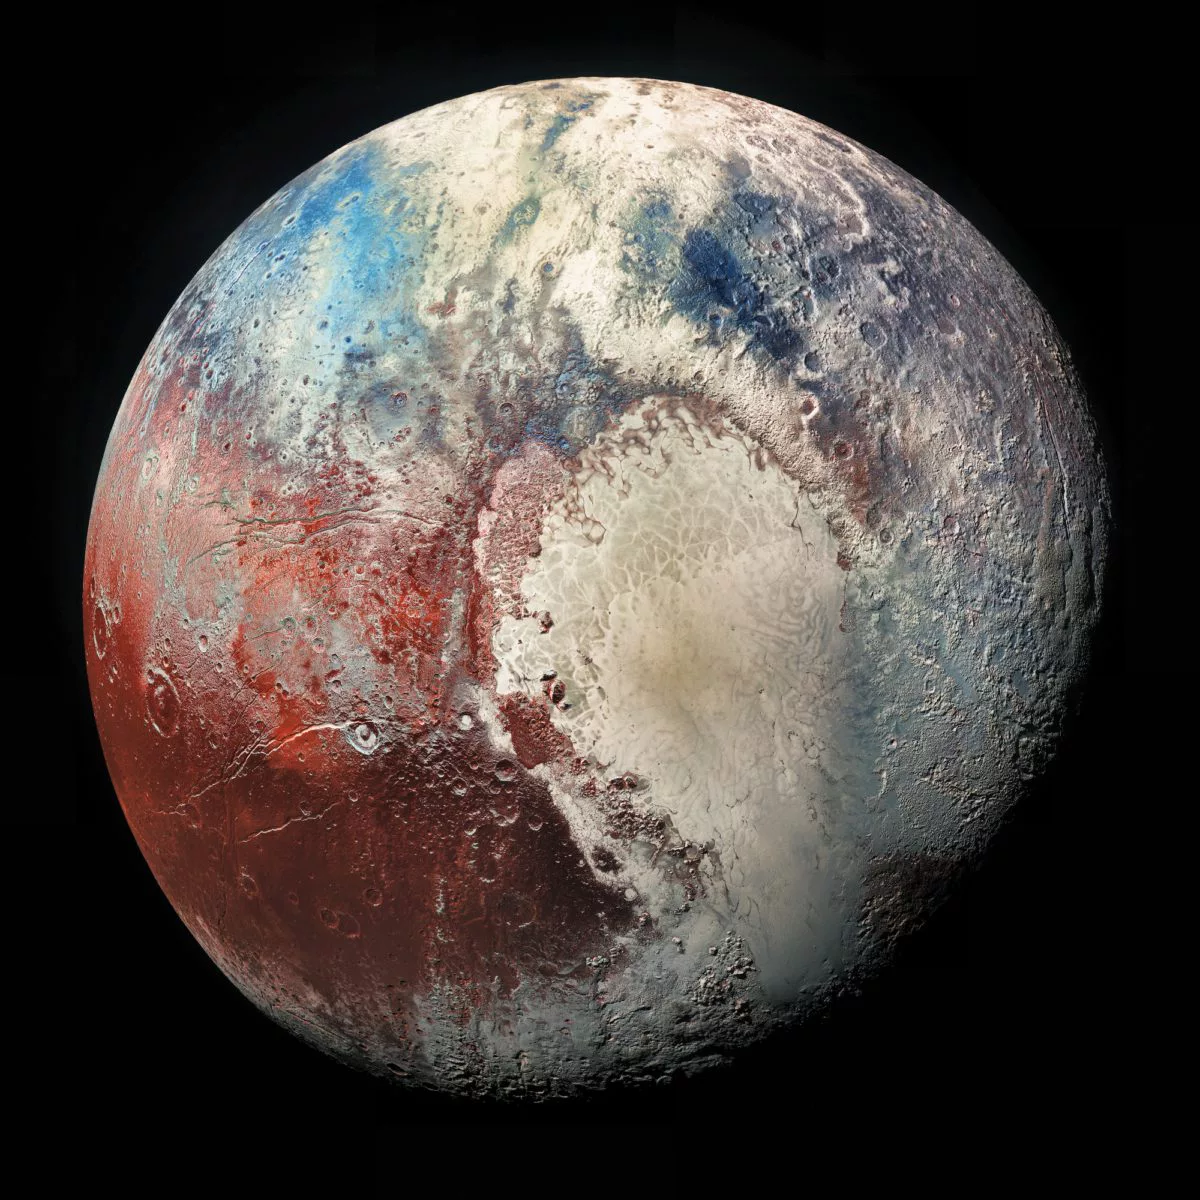 Pluto, Be My Friend